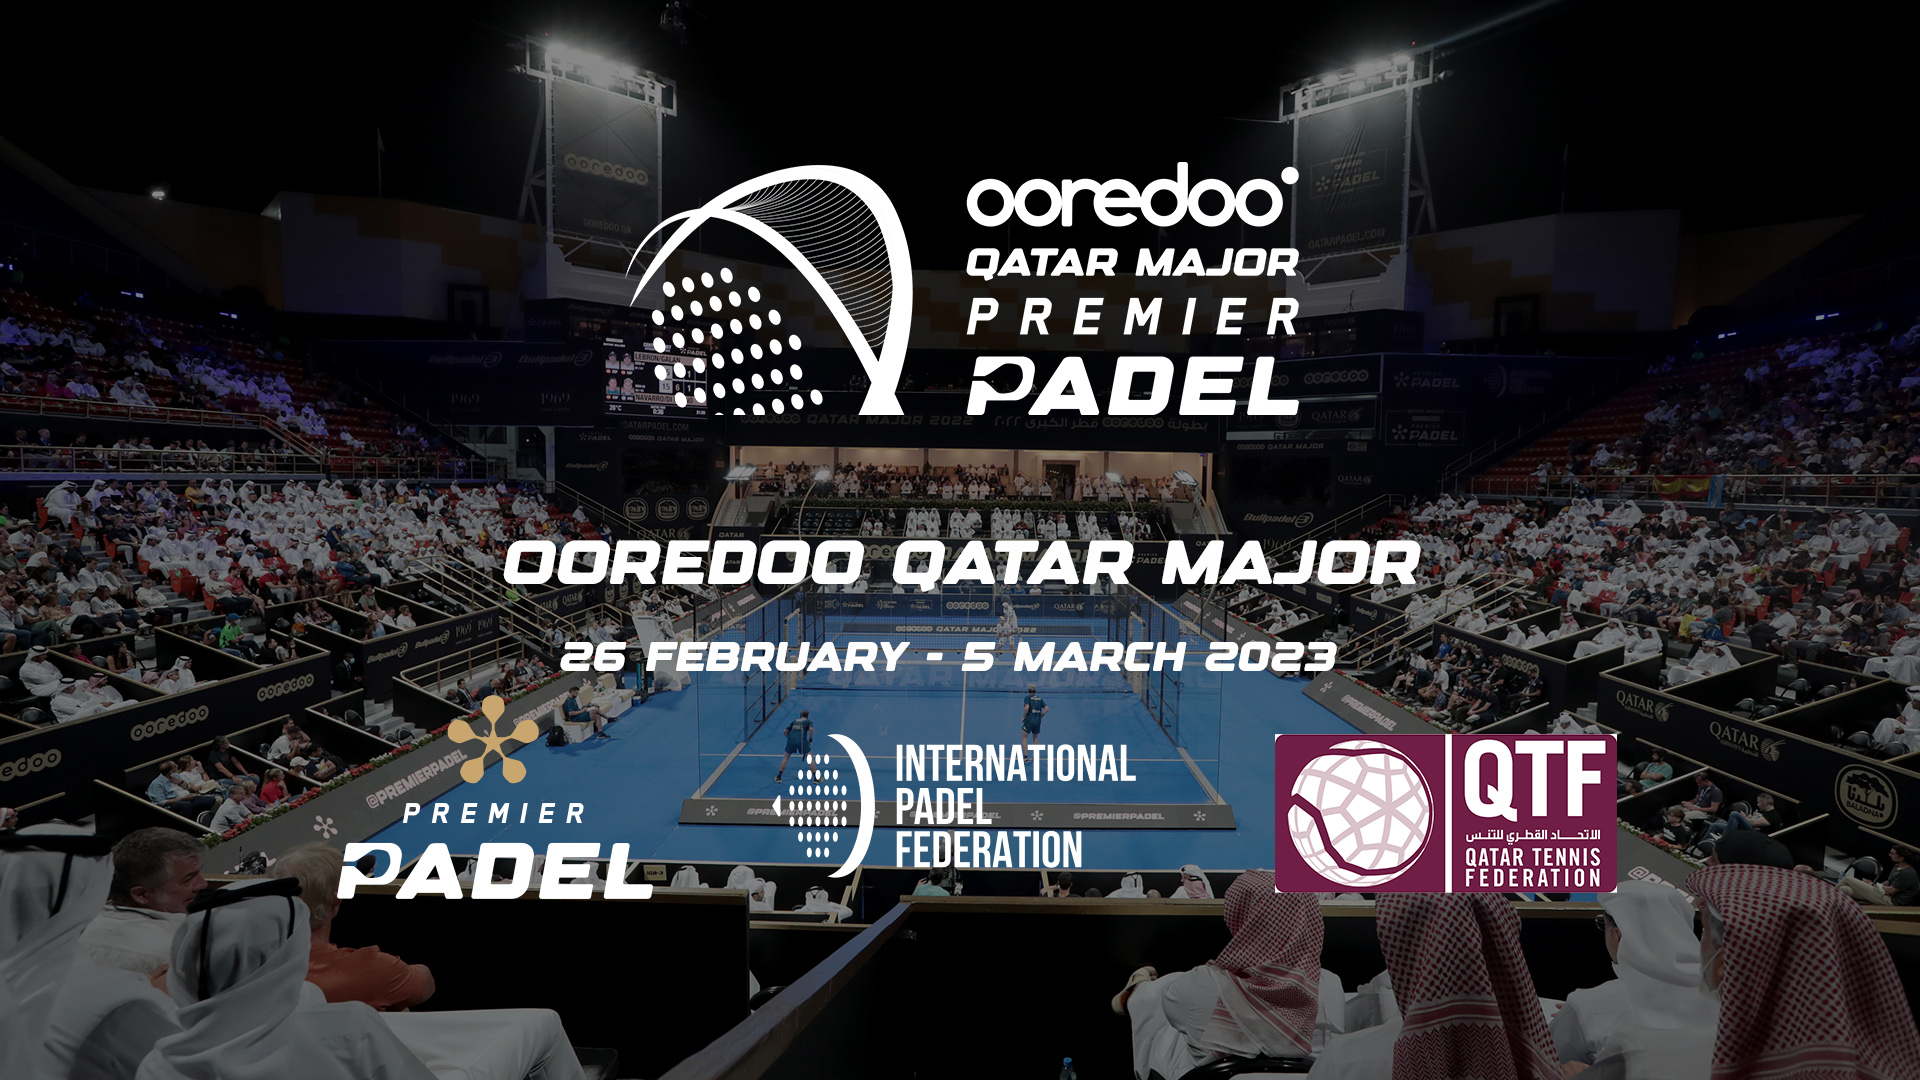 Premier Padel – L’ooredoo Qatar Major 2023 à Doha du 26 février au 5 mars !